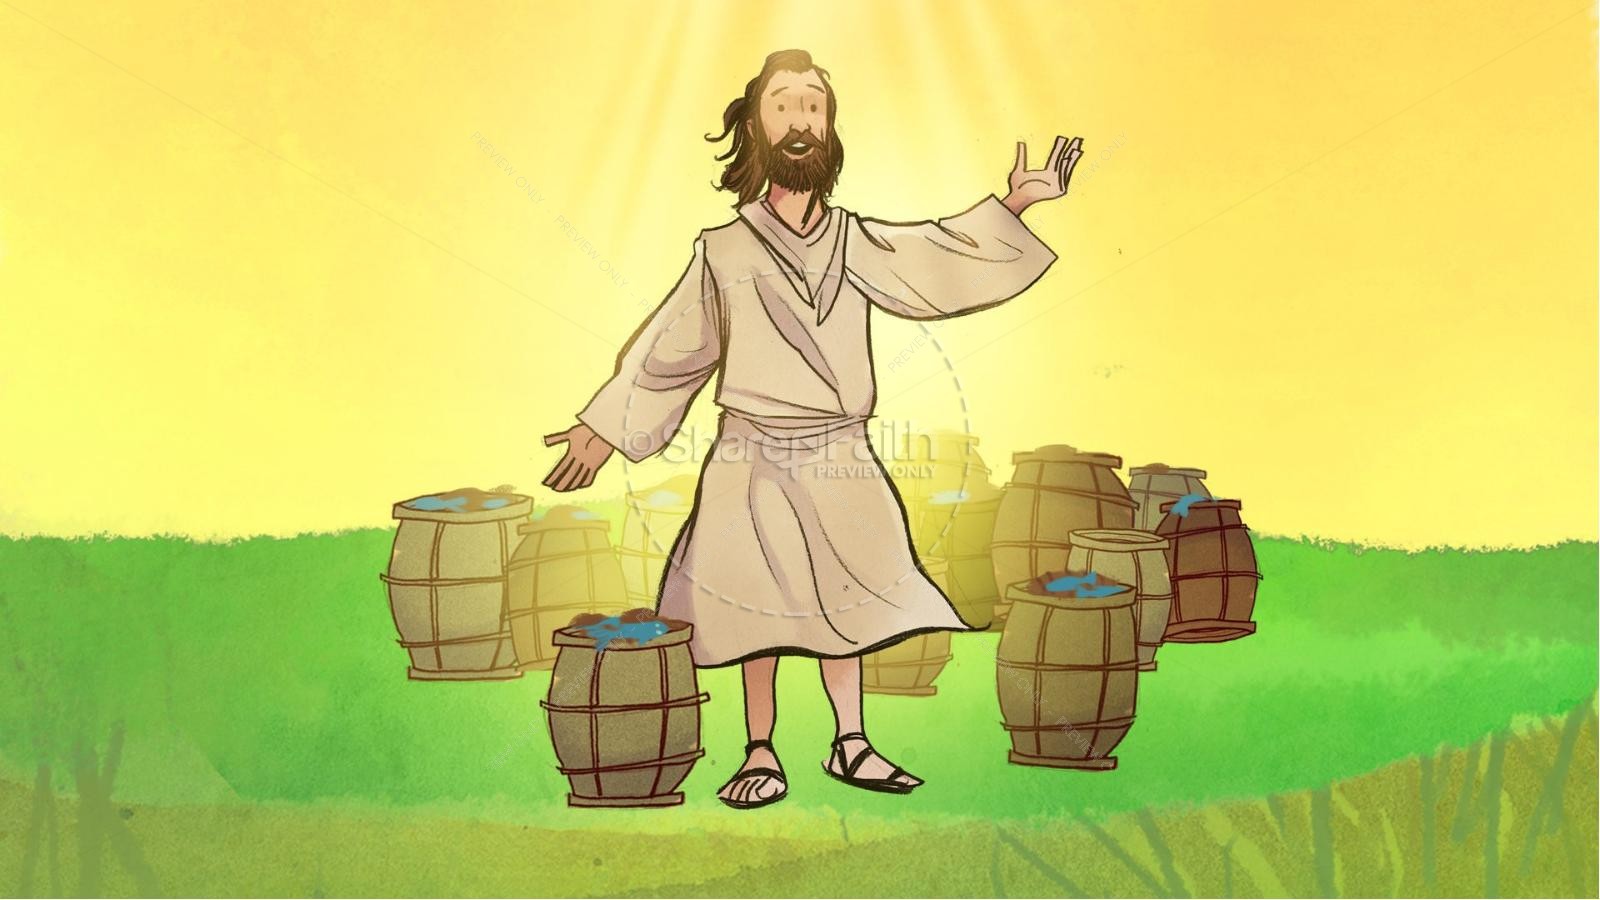 Jesus Feeds 5000 Kids Bible Story